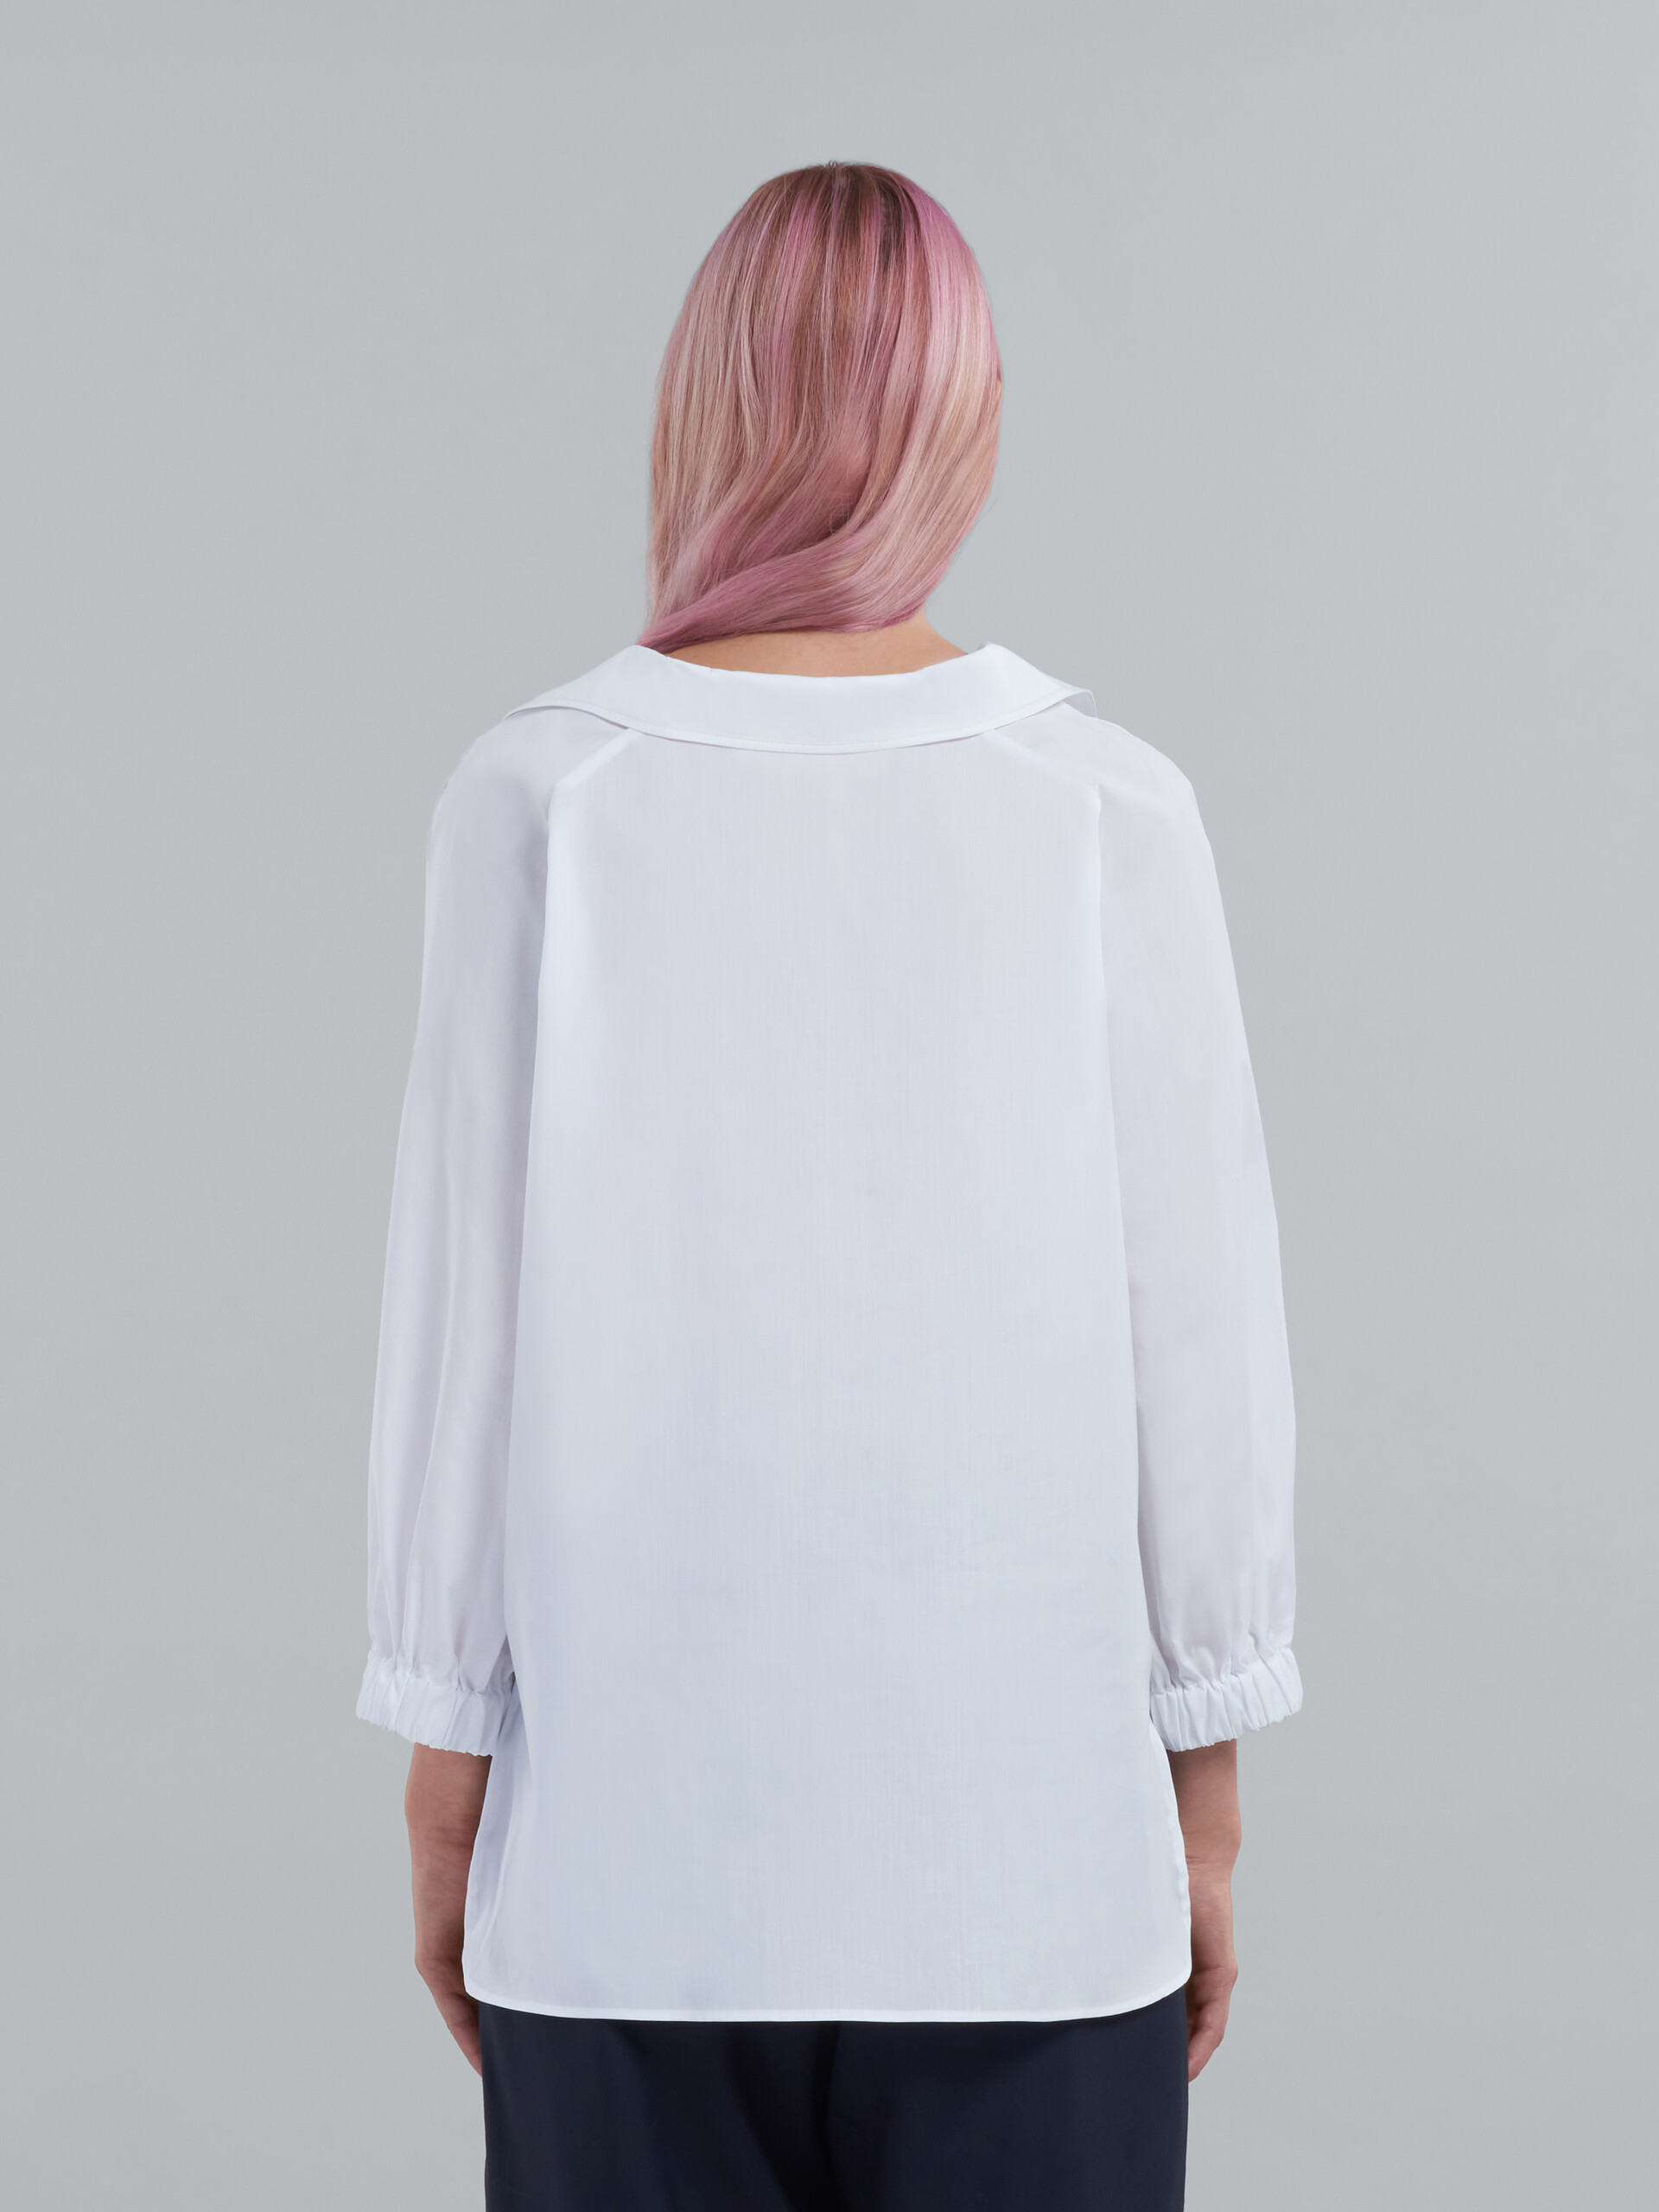 Square-neck top in pink organic poplin - Shirts - Image 3